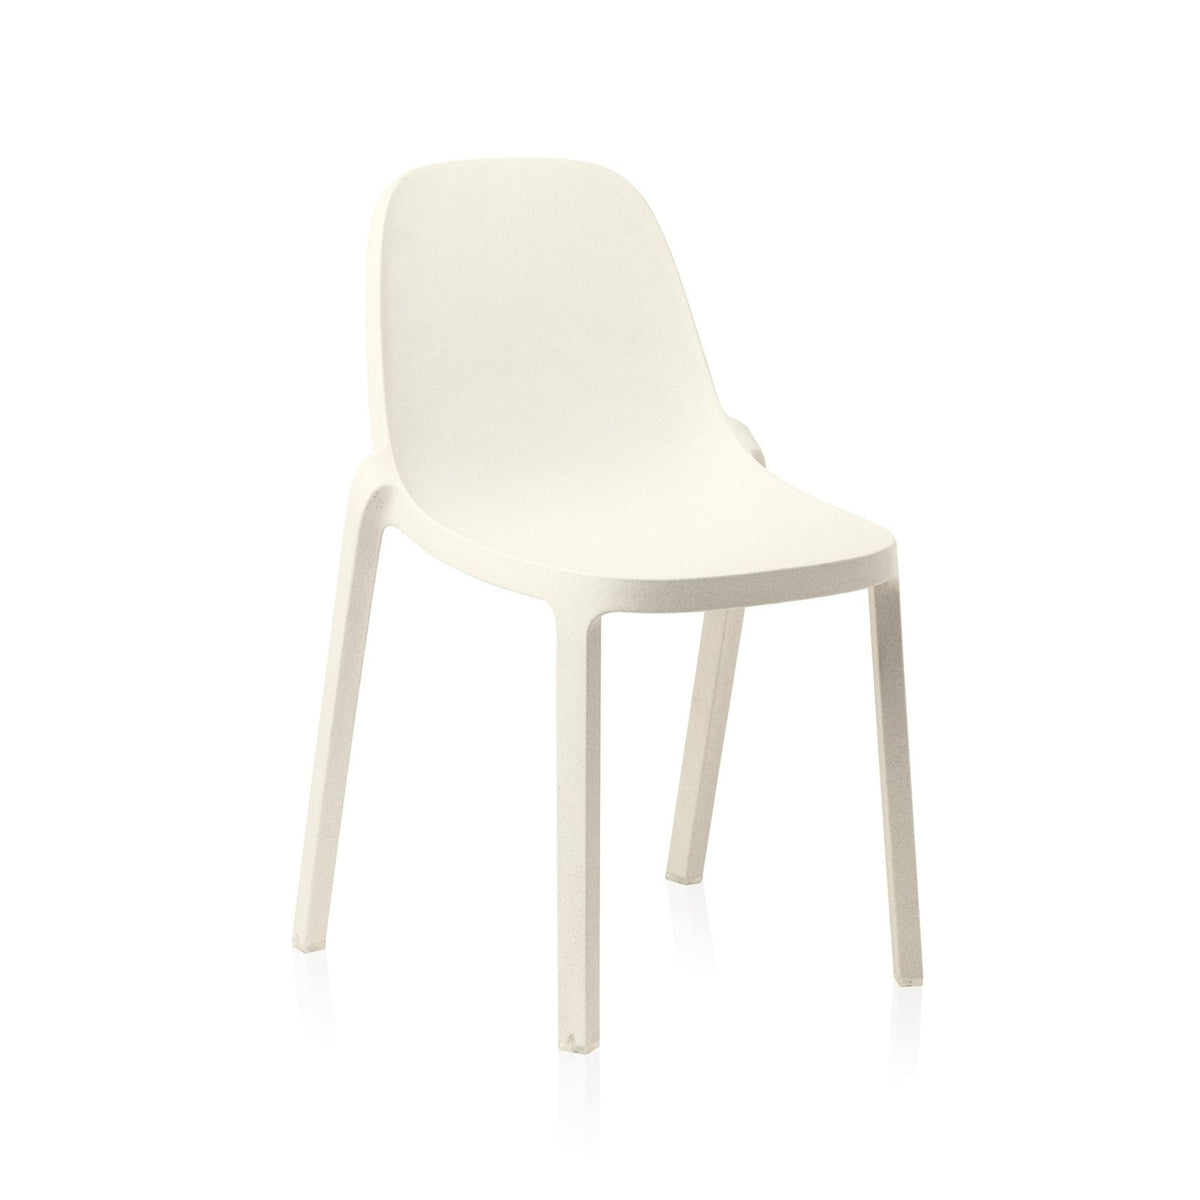 Emeco Broom Chair White